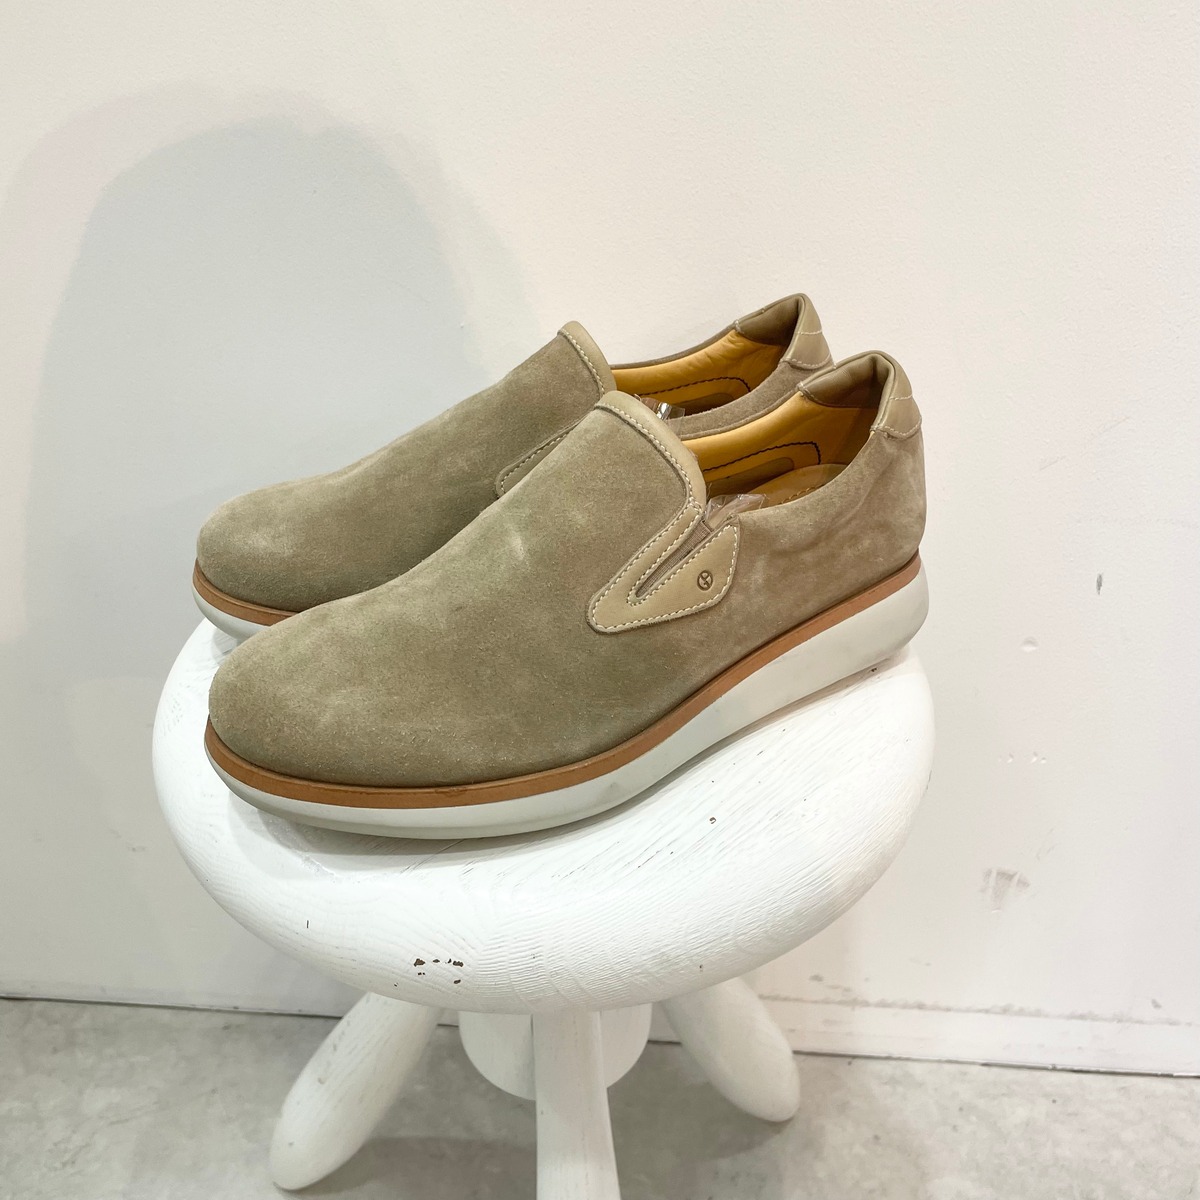 GIORGIO ARMANI/shoes/suede/beige/ジョルジオアルマーニ/靴/ベージュ/スウェード | UTA5